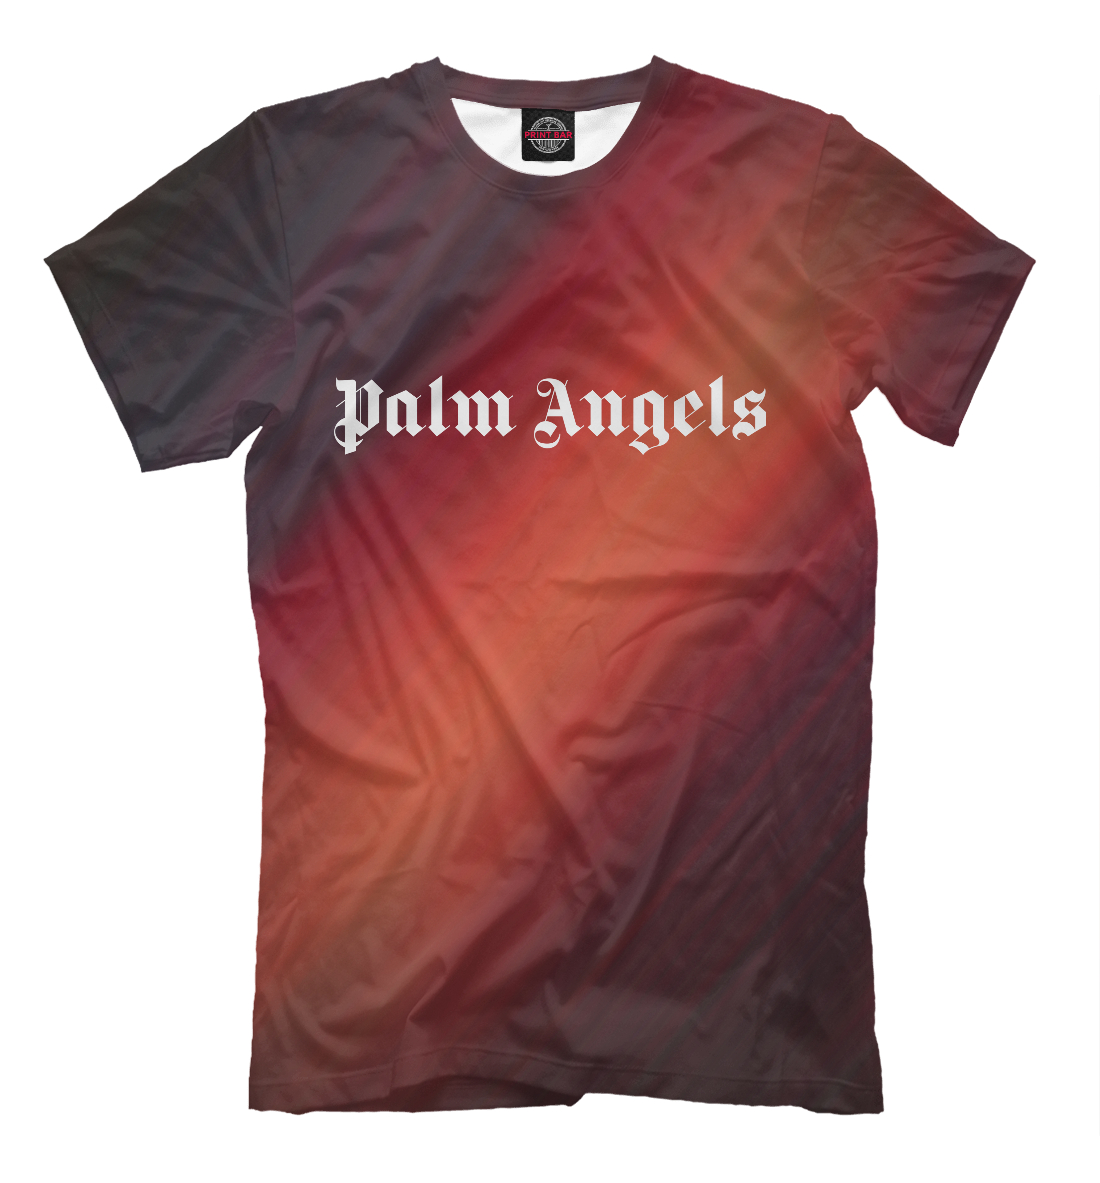 Футболка Palm Angels для мужчин, артикул: APD-362209-fut-2mp